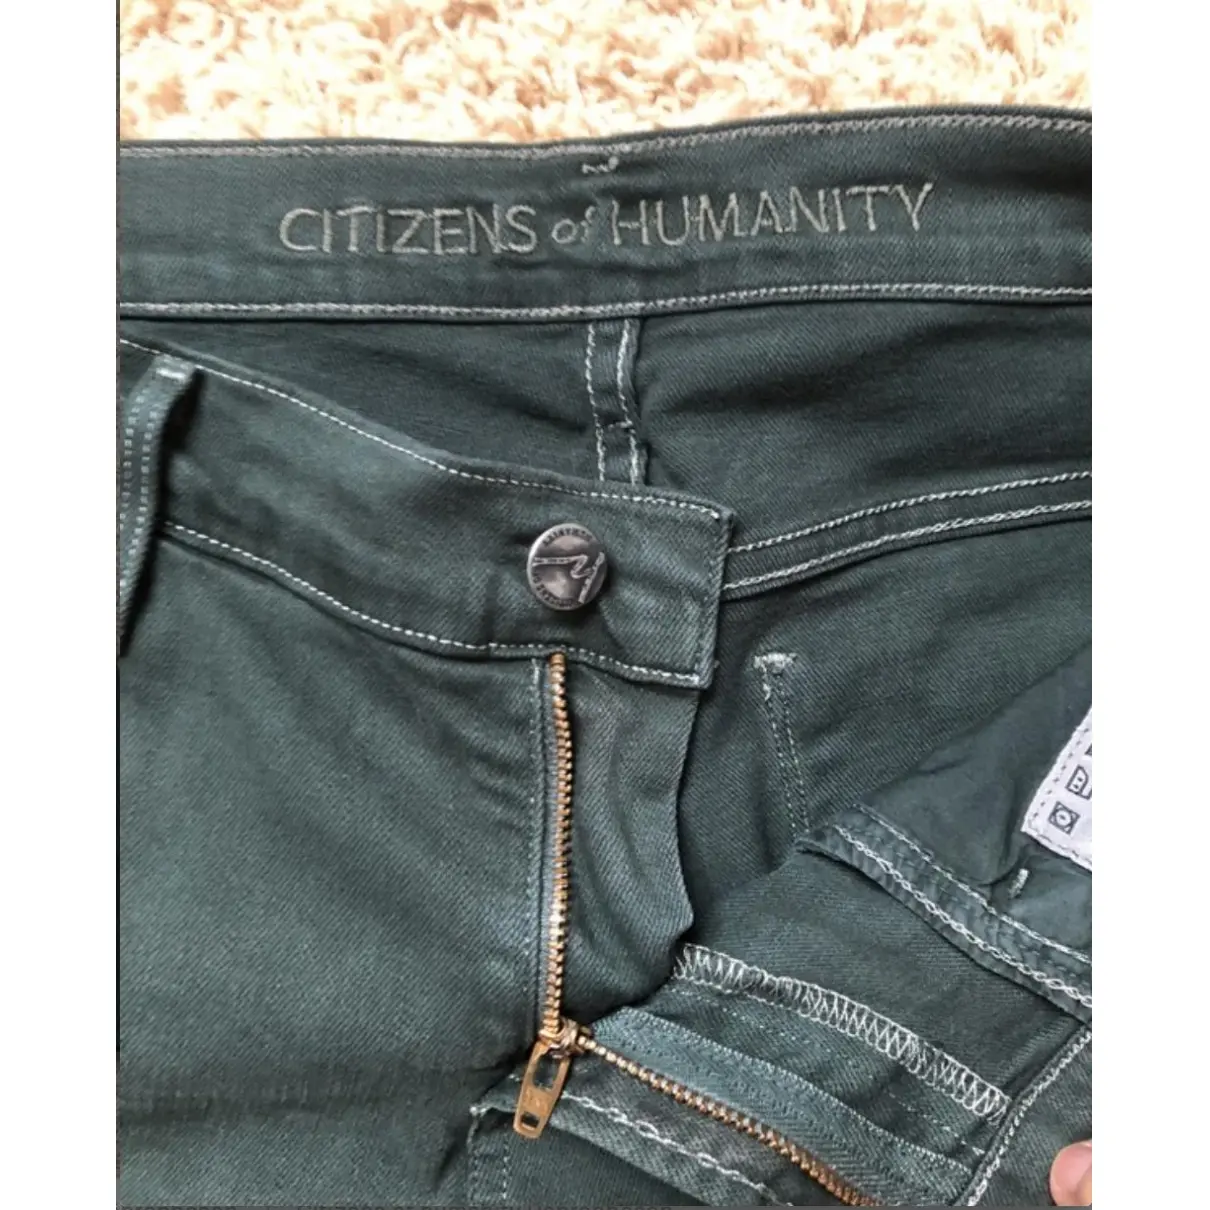 Buy Citizens Of Humanity Slim pants online